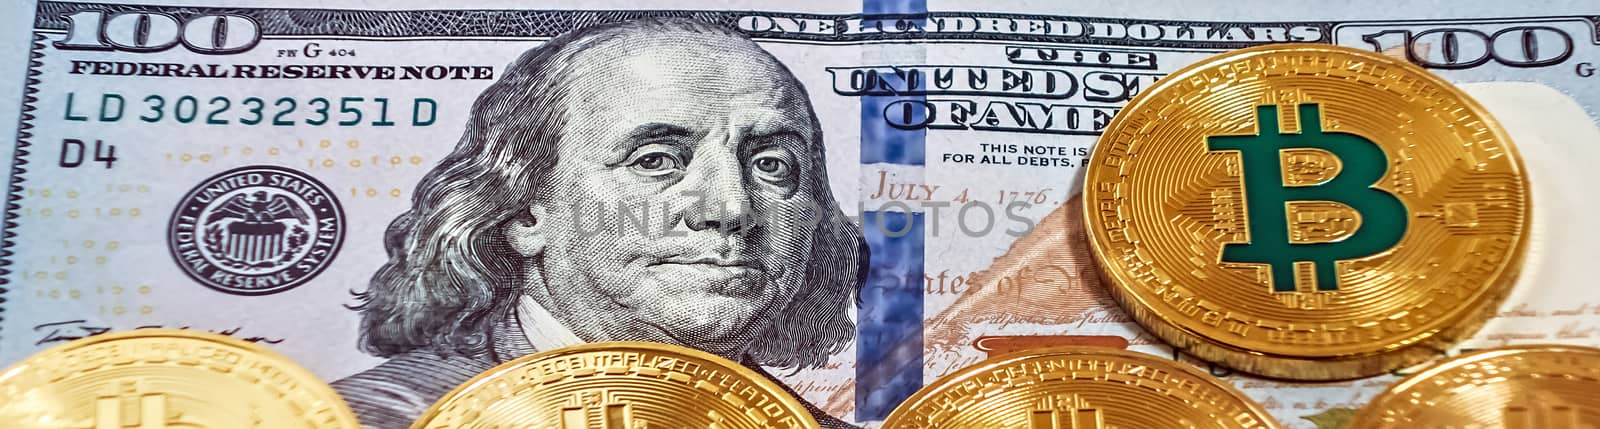 Gold bitcoin coin one hundred dollars bills. by Vladyslav